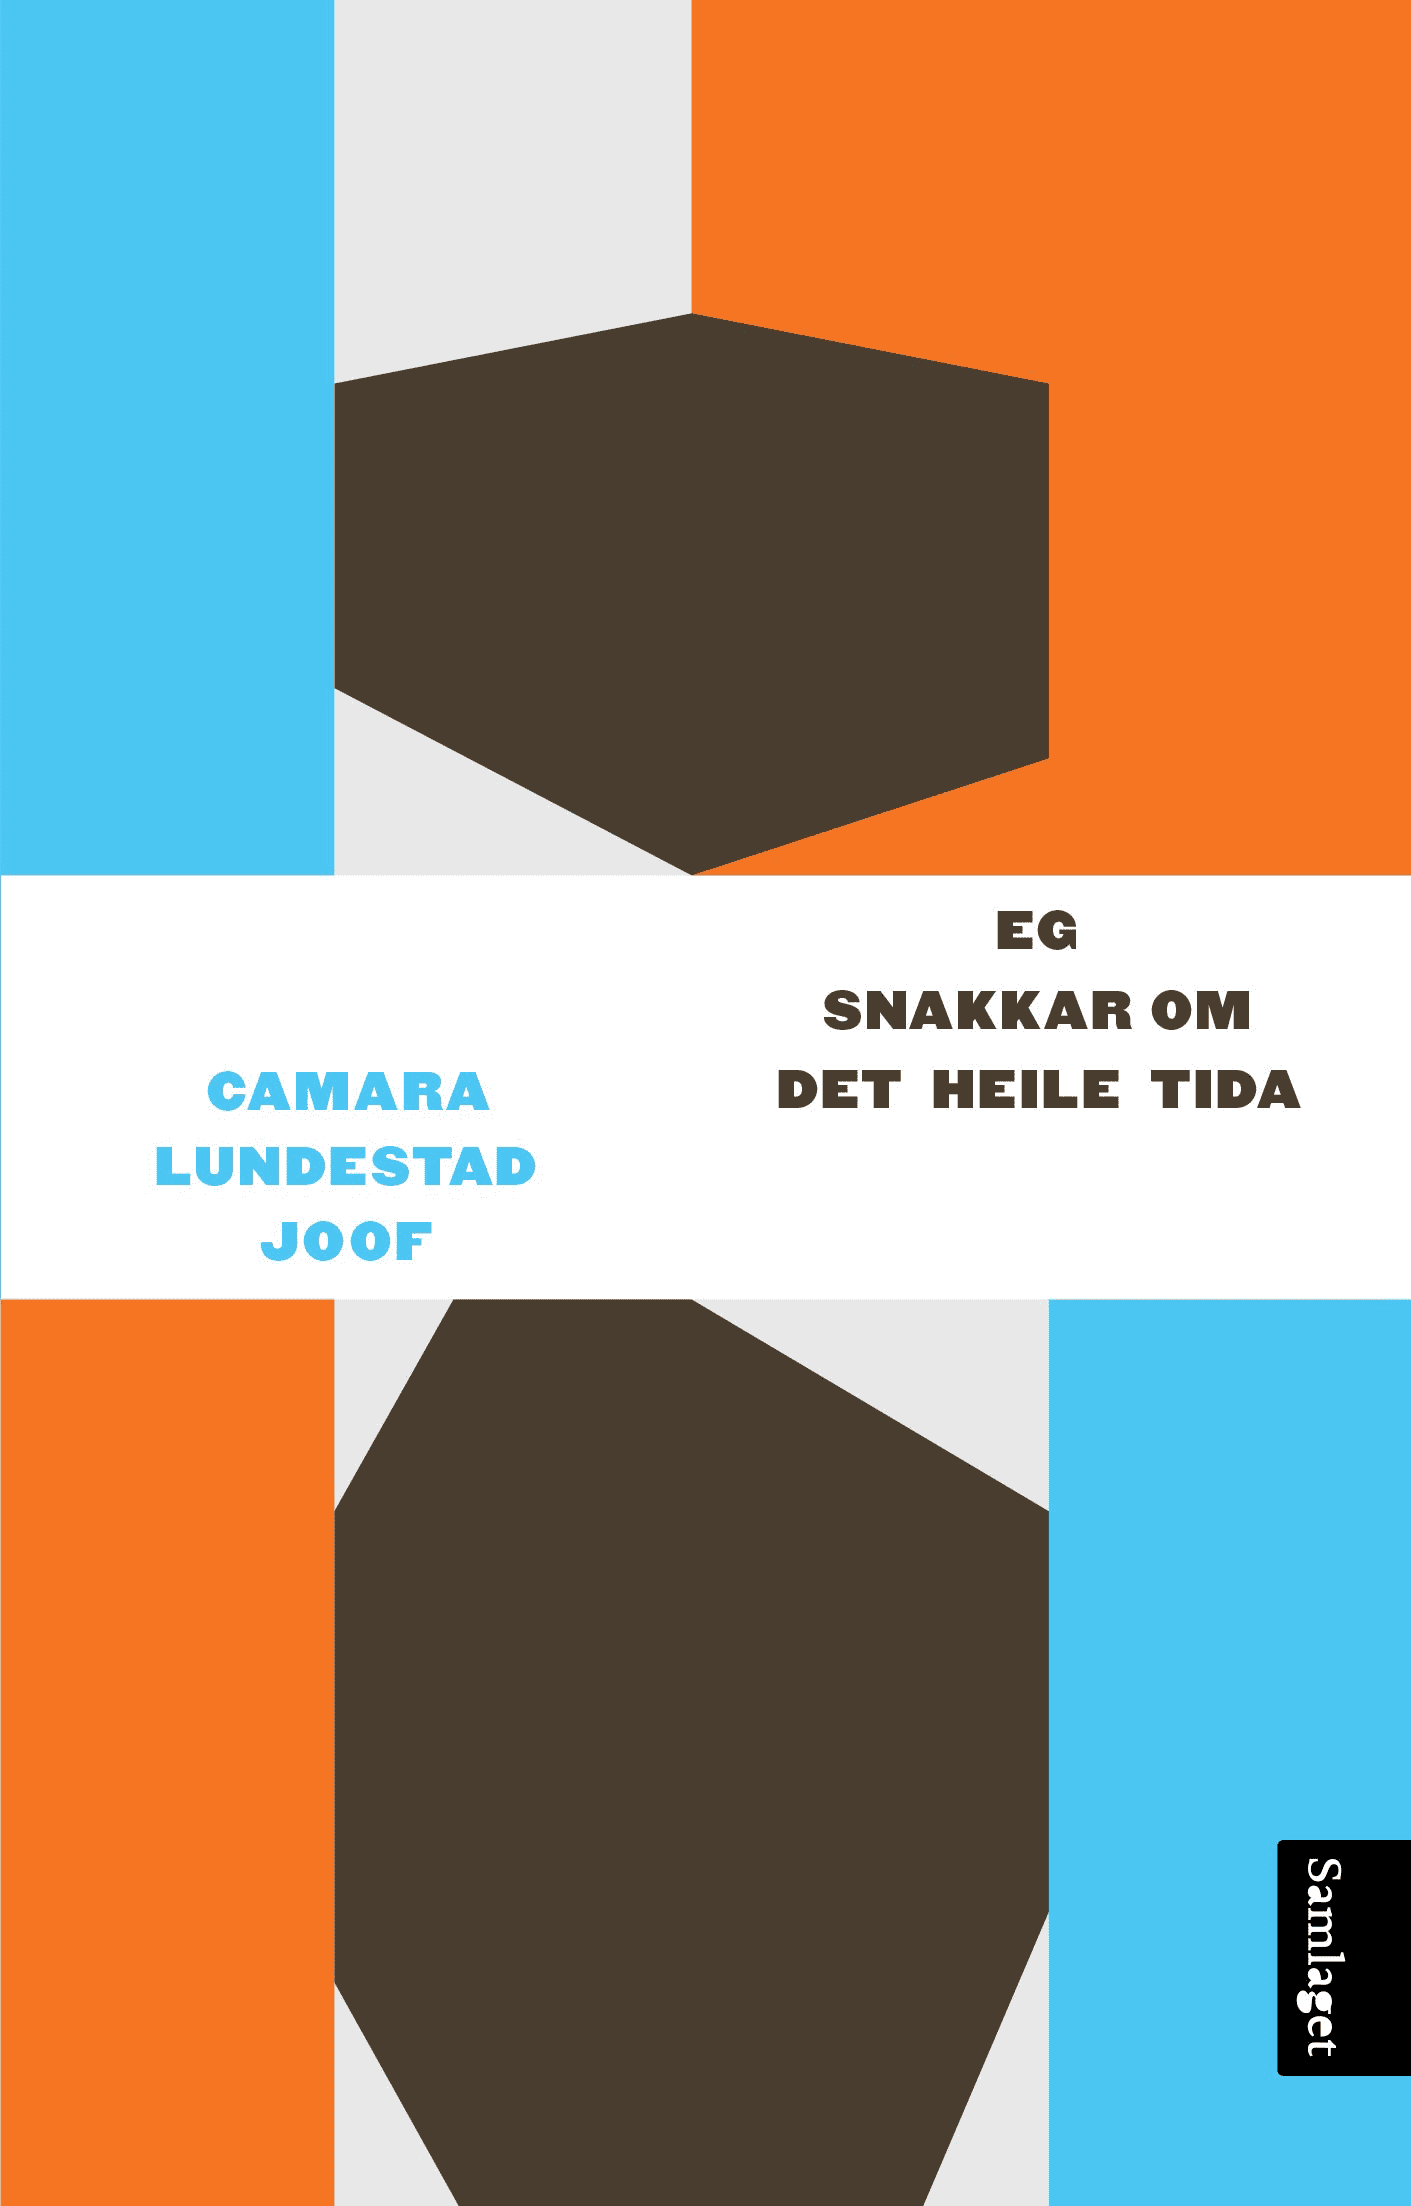 Eg snakkar om det heile tida (2018) Camara Lundestad Joof